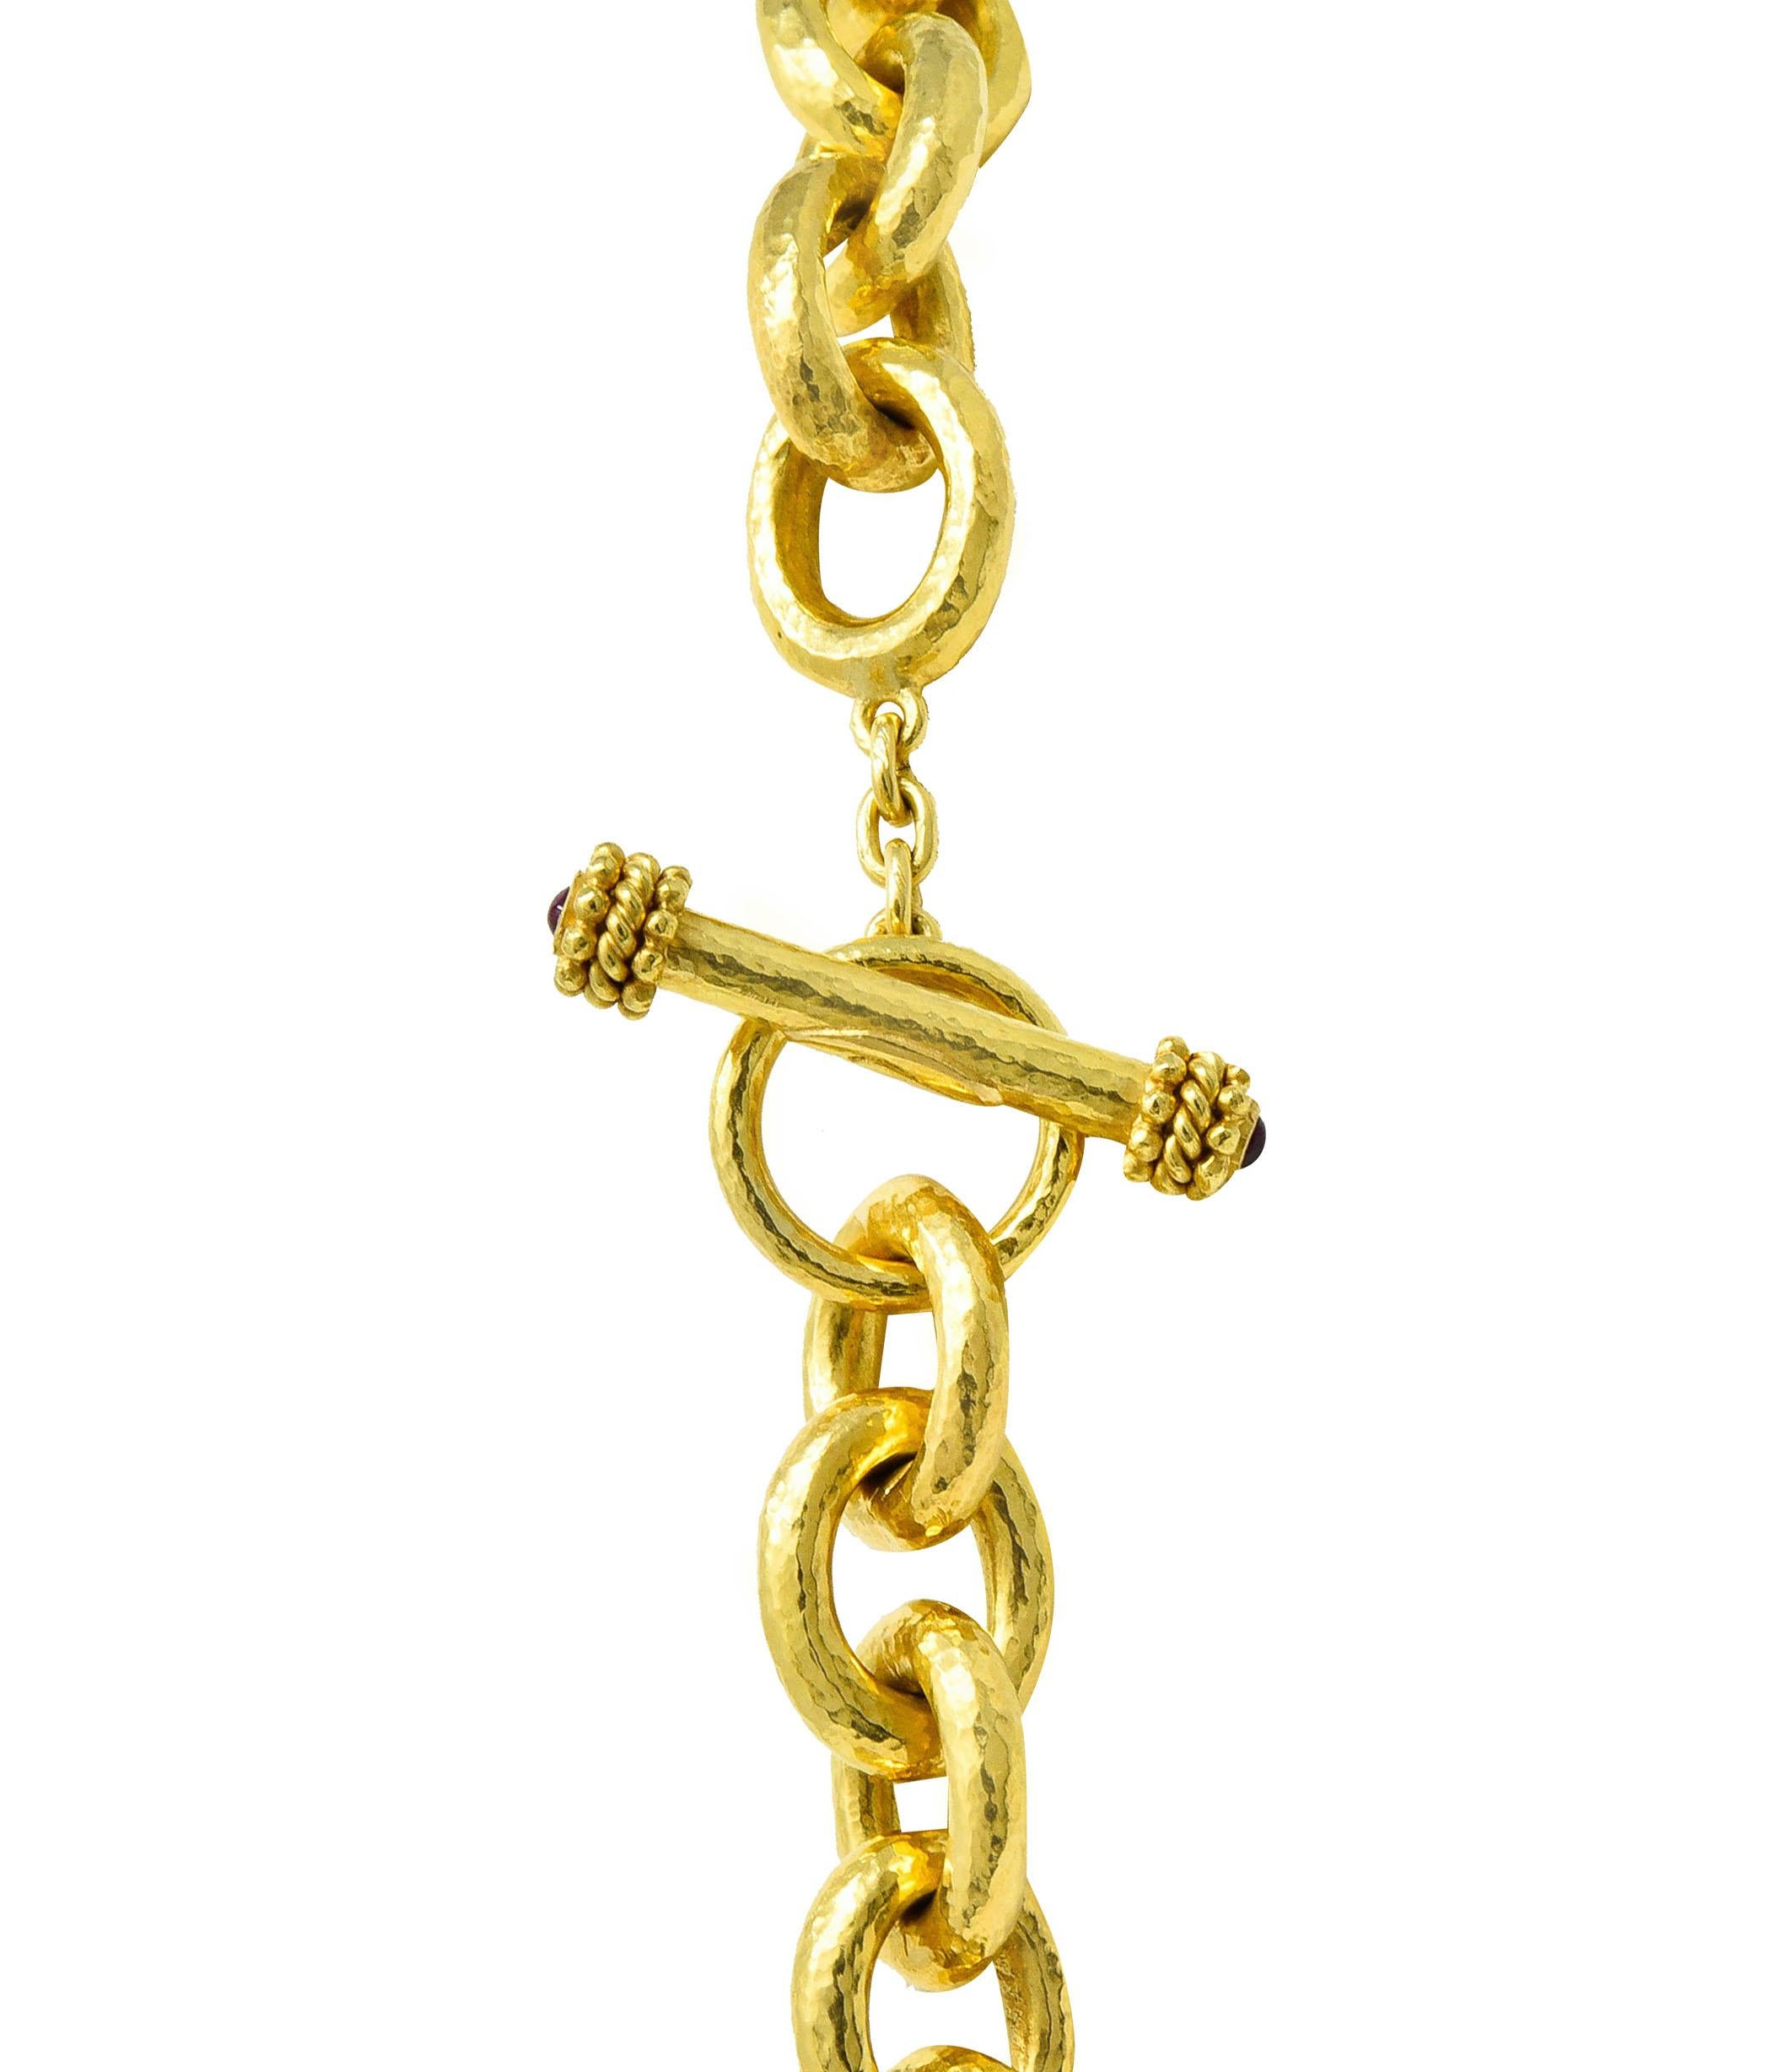 Cabochon Elizabeth Locke 19 Karat Yellow Gold Hammered Curb Link Chain Collar Necklace